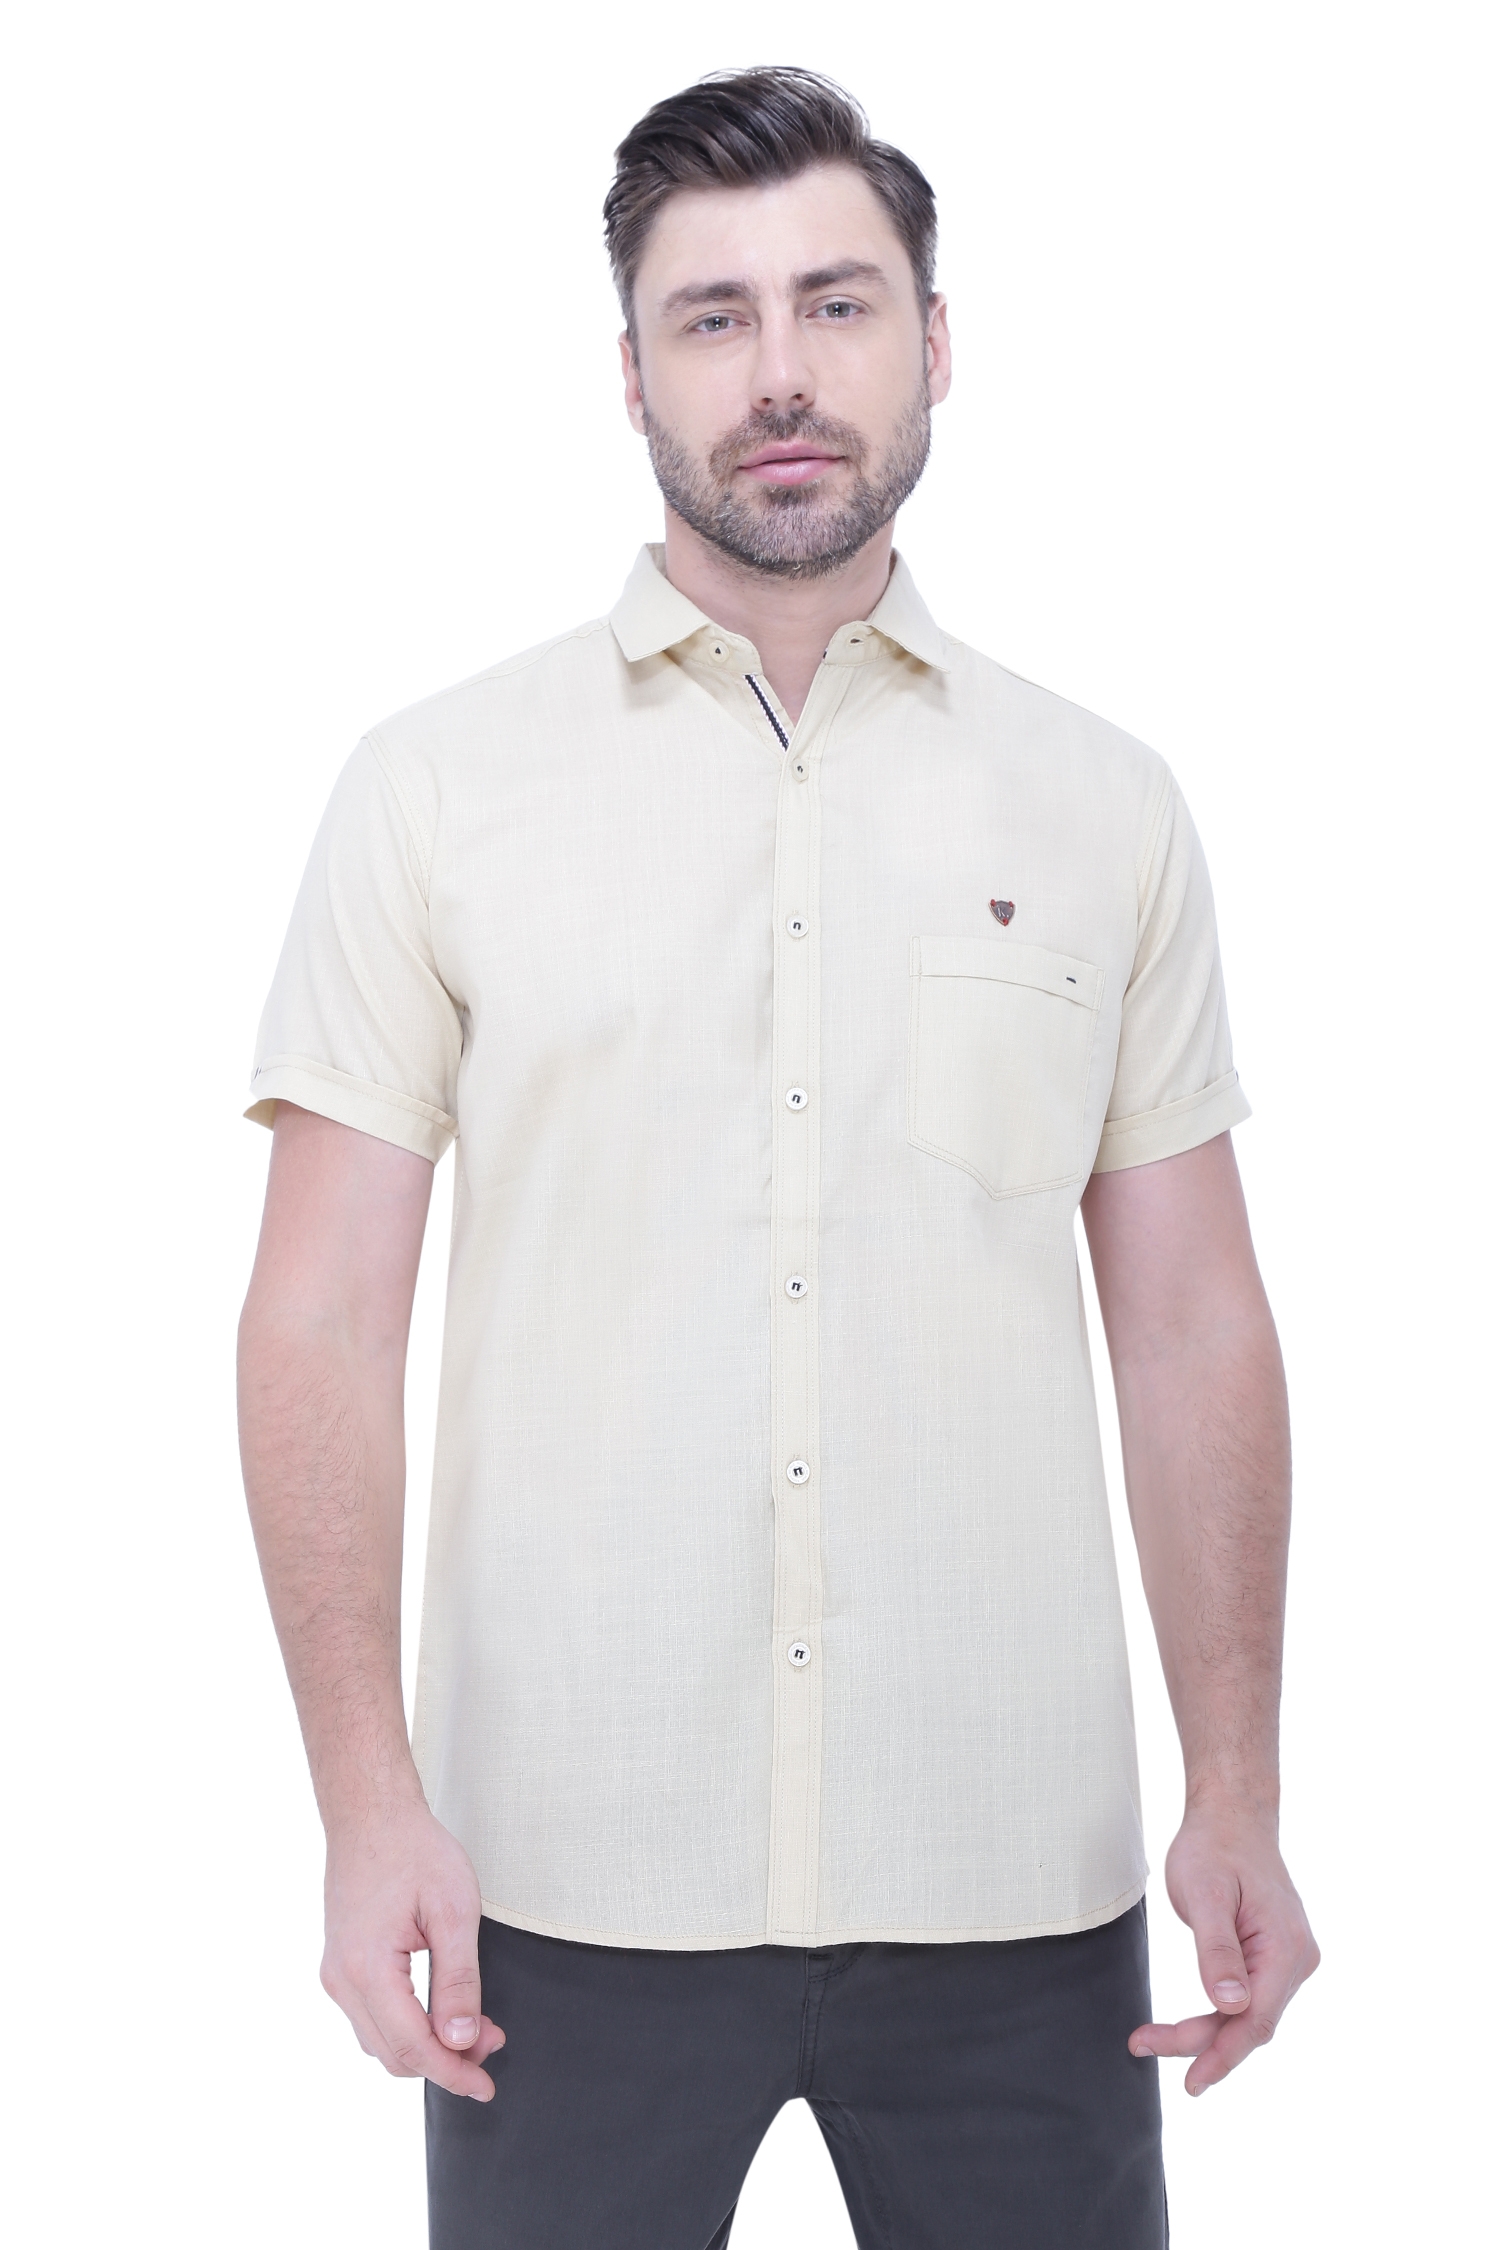 Kuons Avenue | Kuons Avenue Men's Linen Blend Half Sleeves Casual Shirt-KACLHS1223